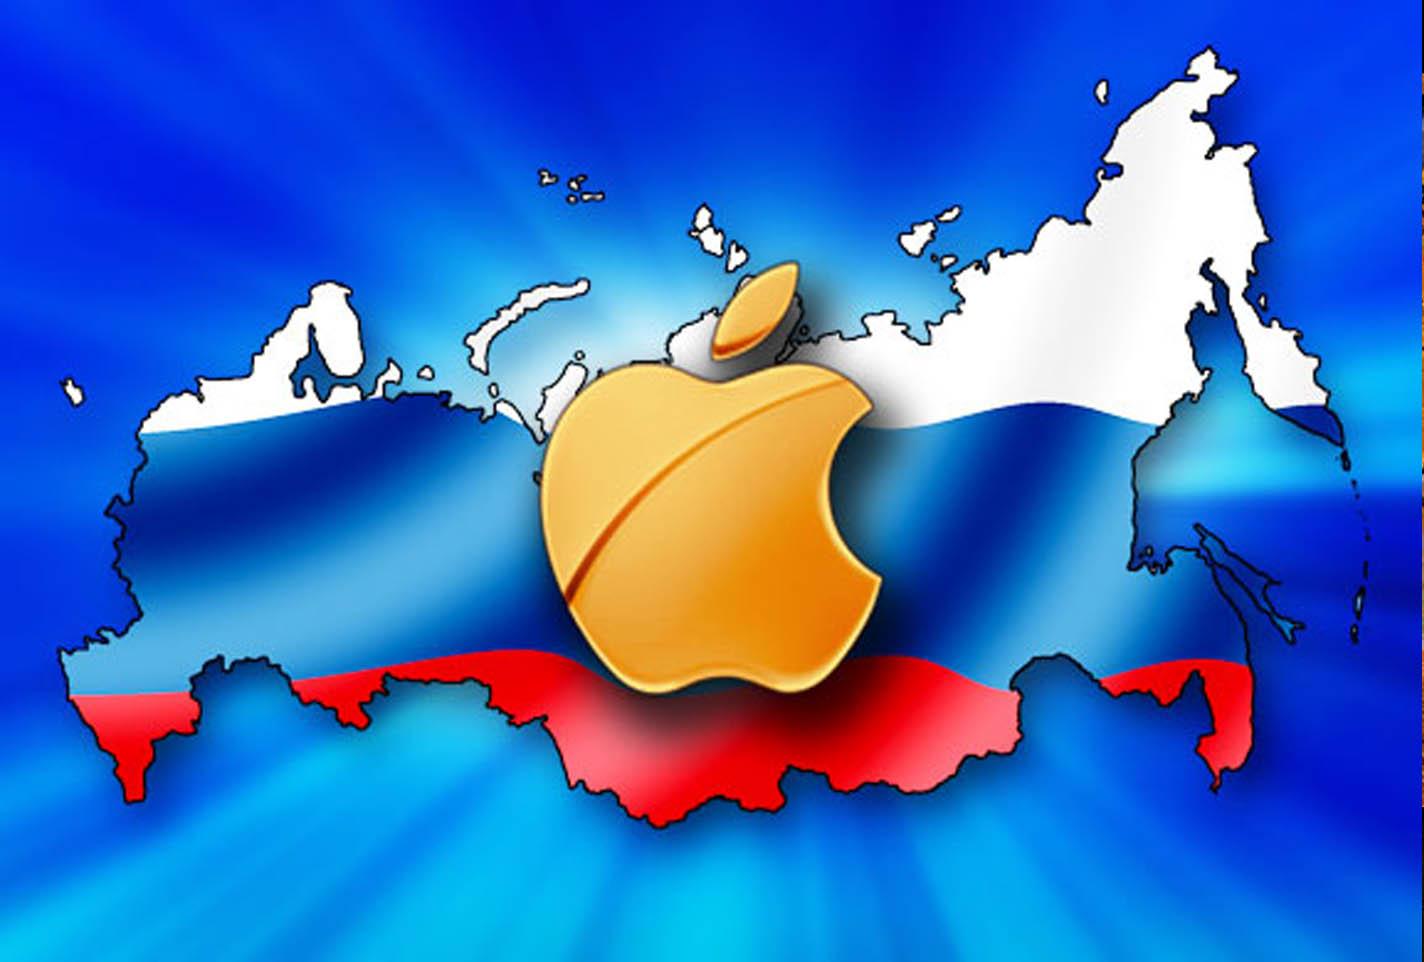 Apple Rusia